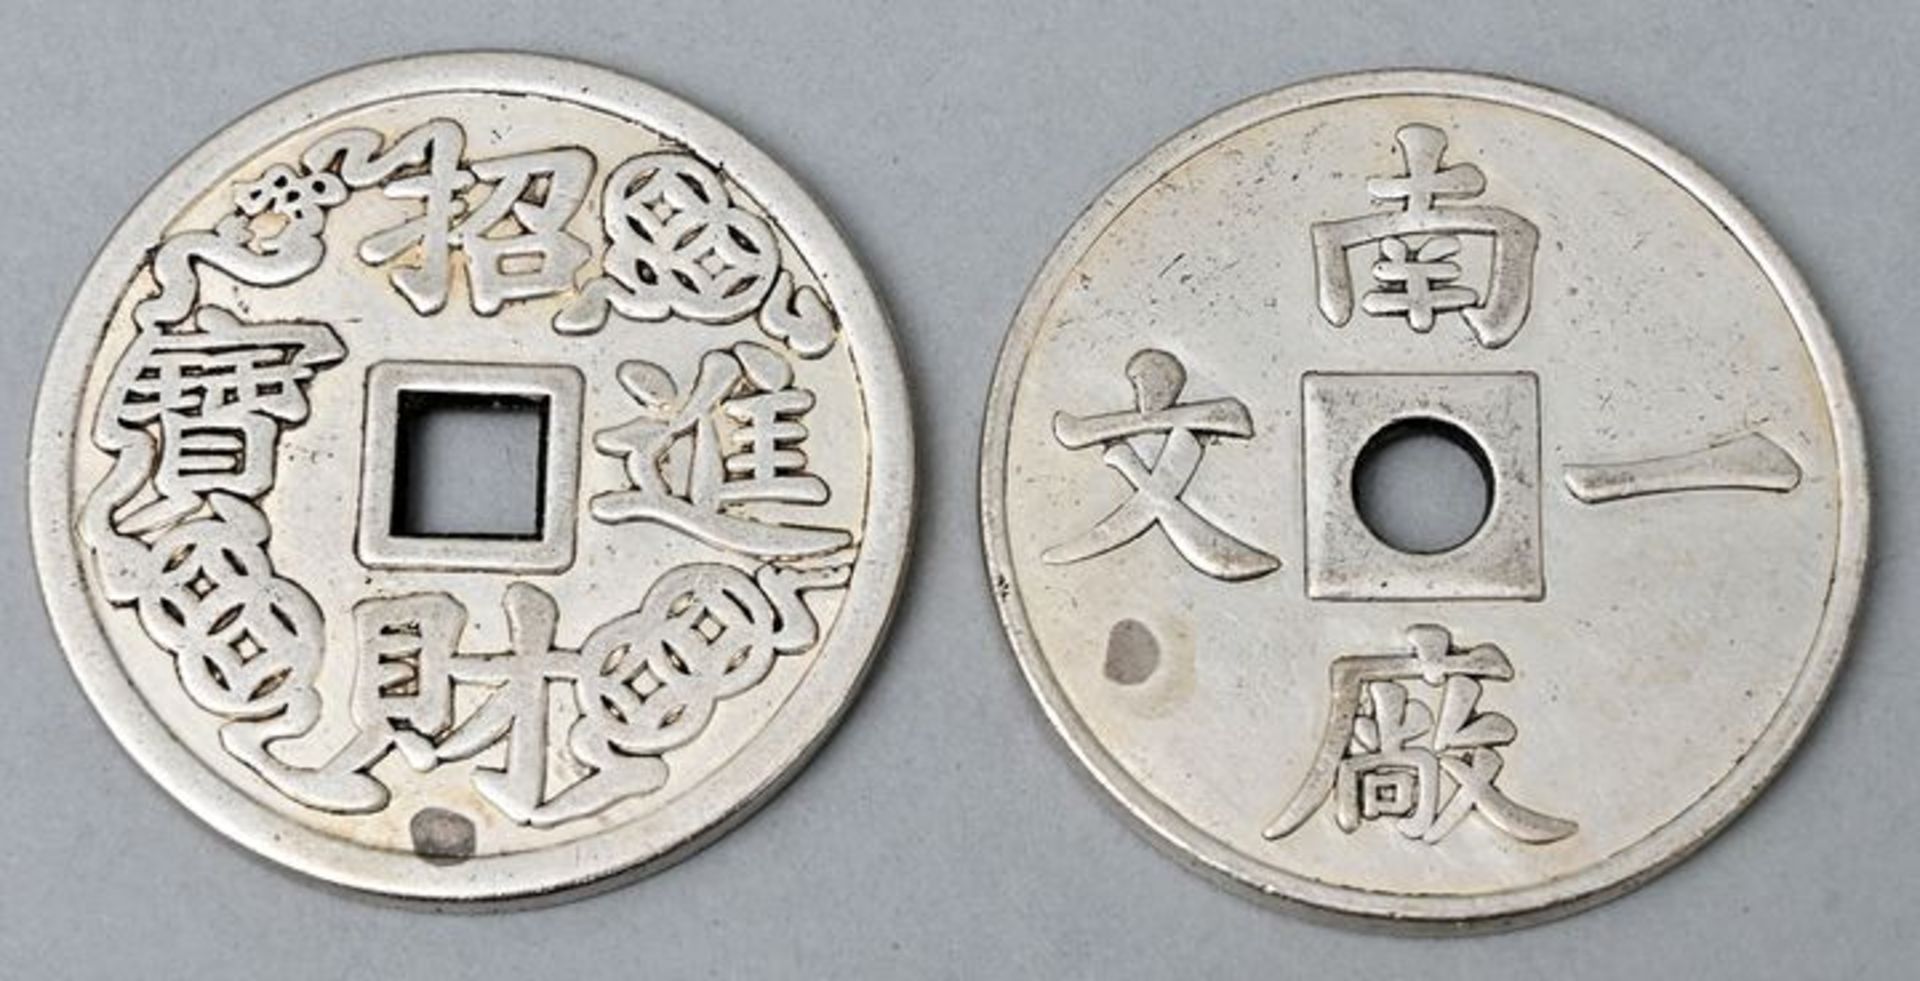 Zwei Münznachbildungen / Two coin replicas - Image 2 of 3